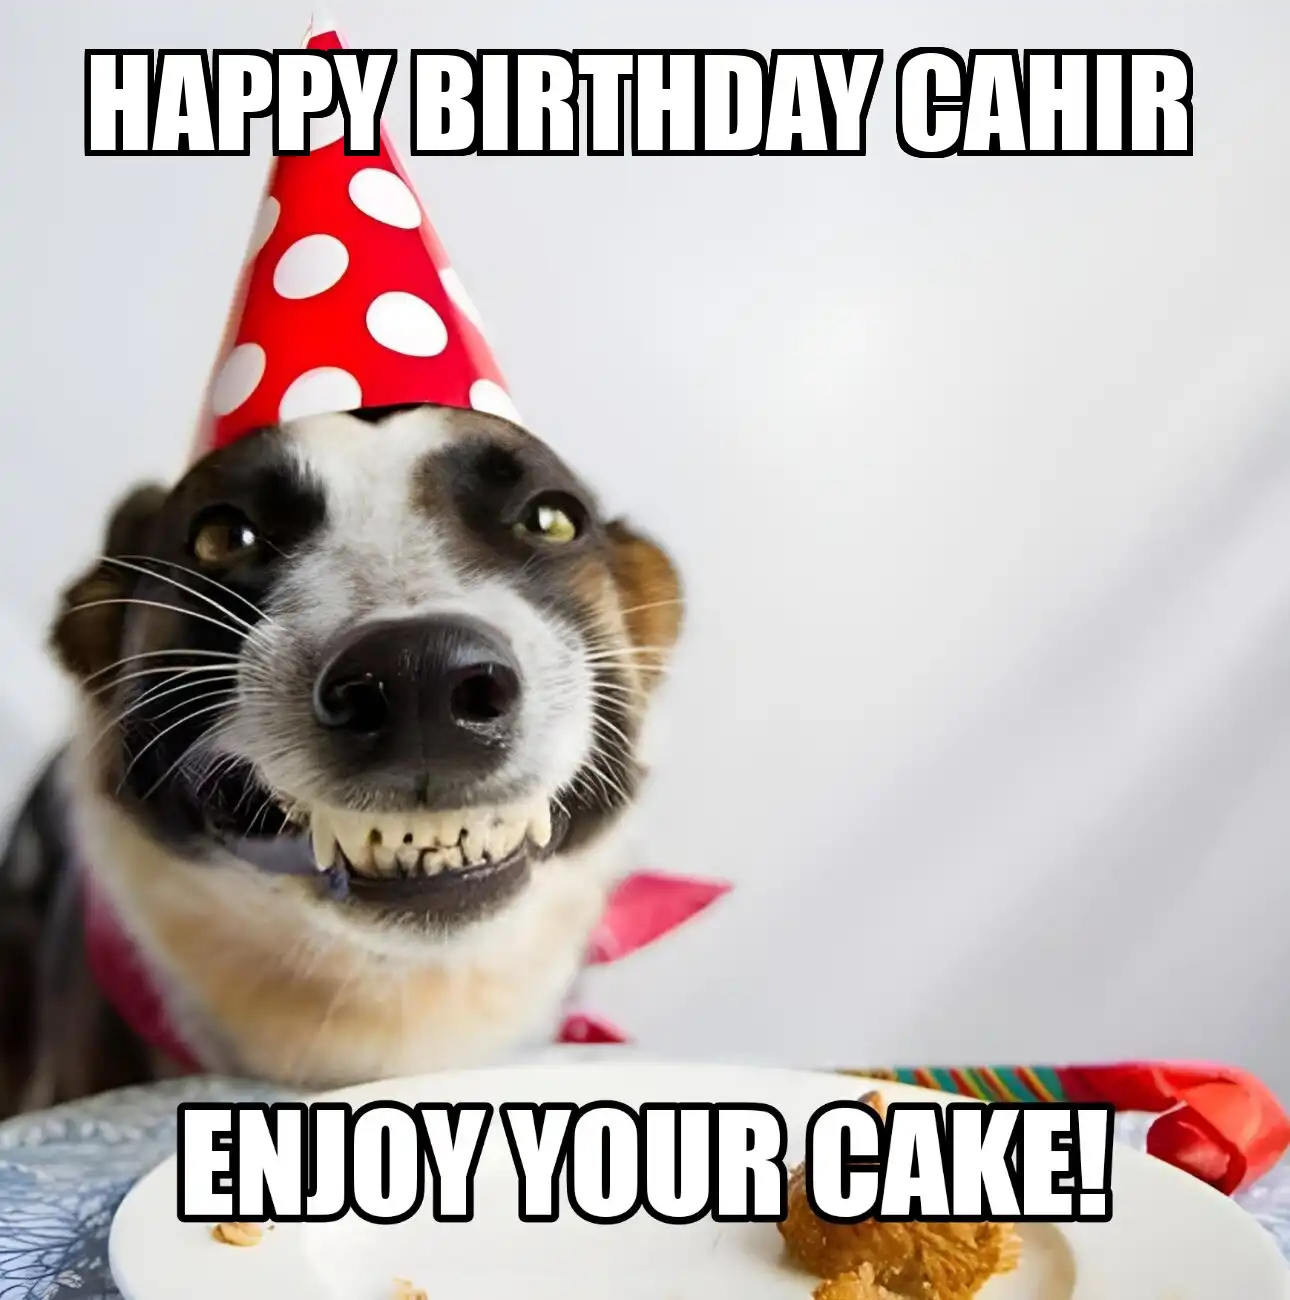 Happy Birthday Cahir Enjoy Your Cake Dog Meme